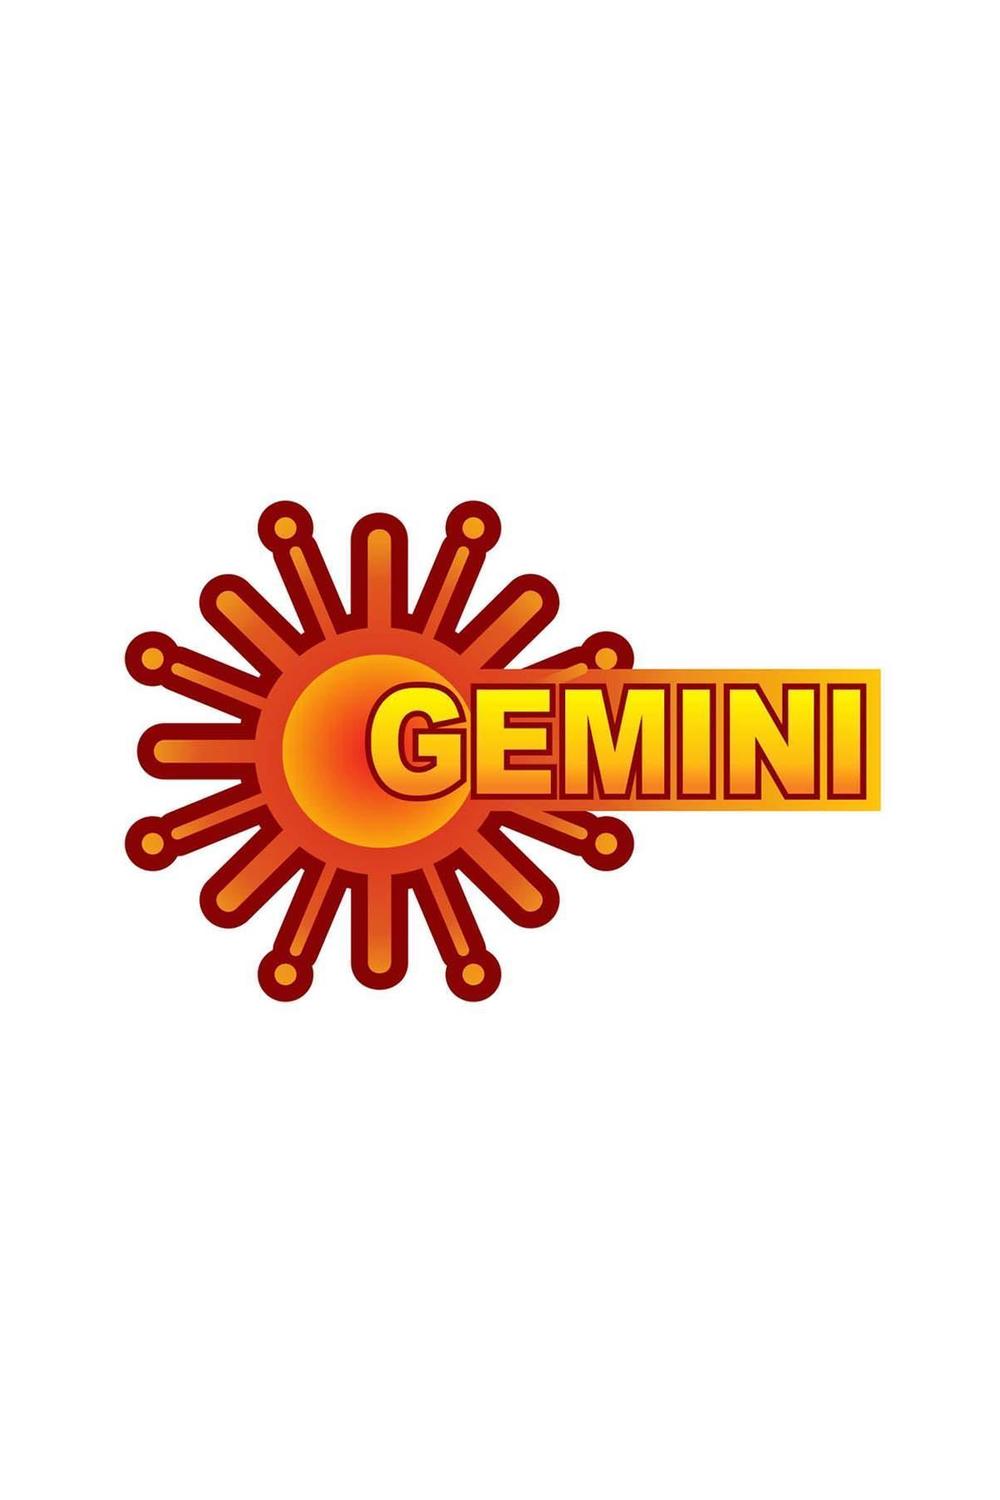 gemini tv serials online free